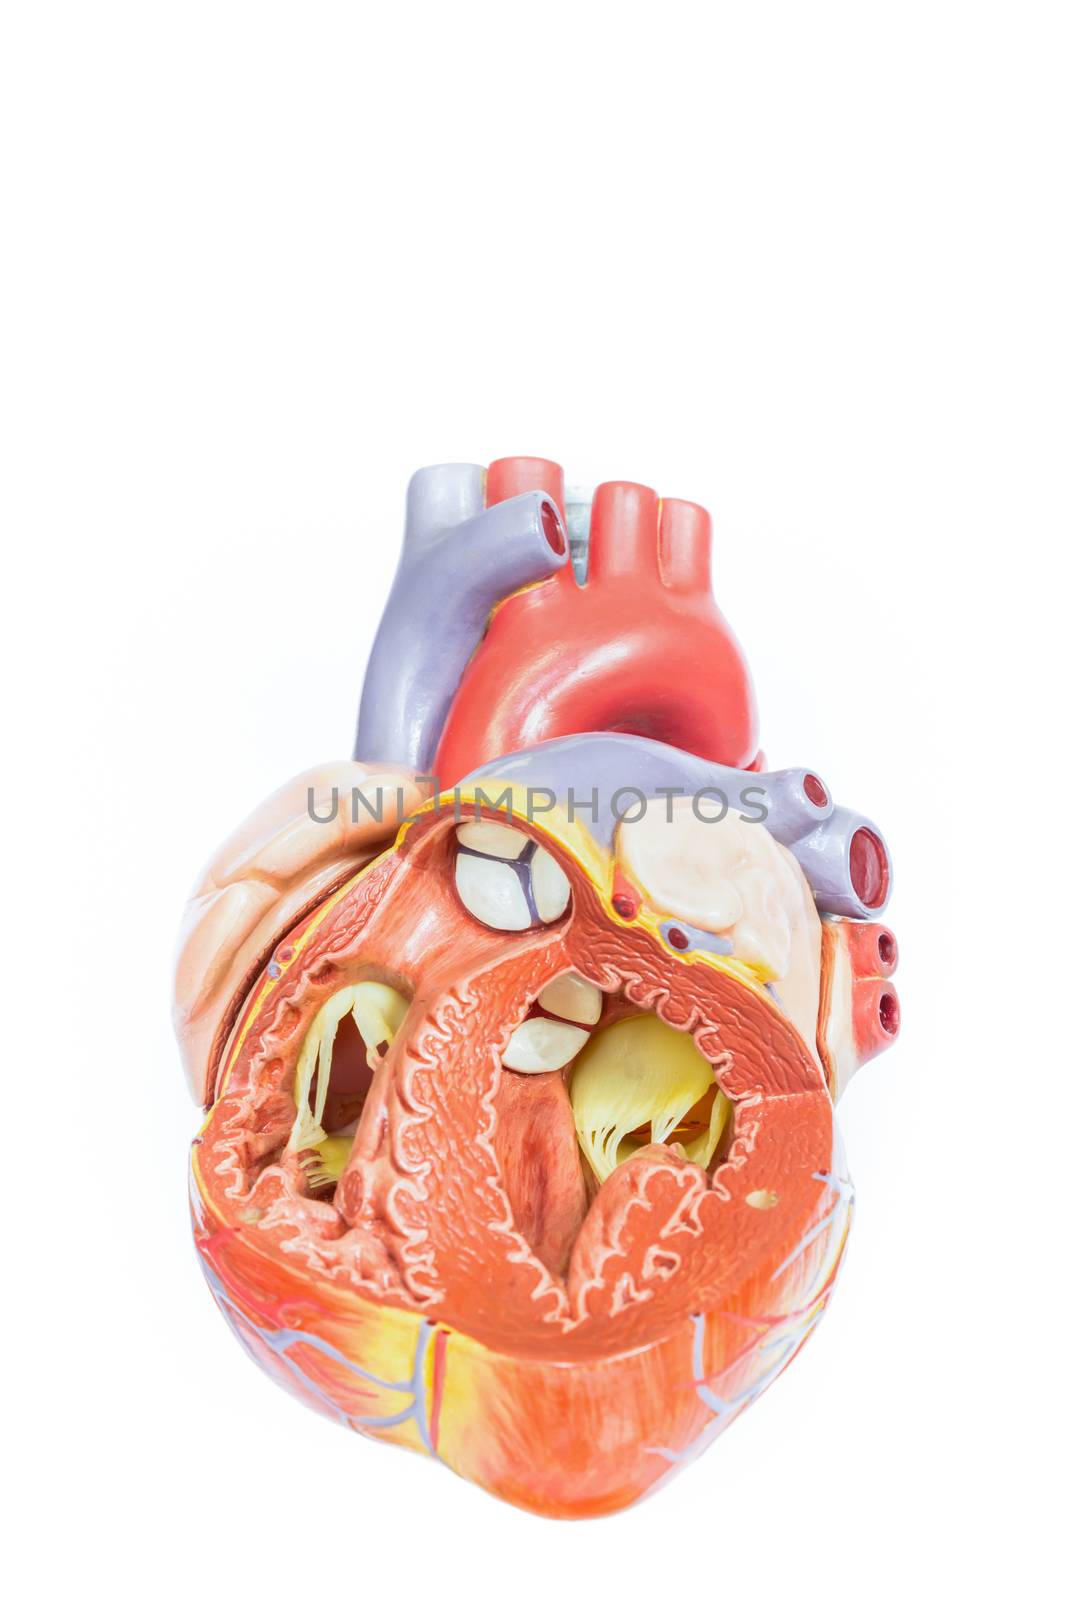 Open artificial human heart model front view  by BenSchonewille